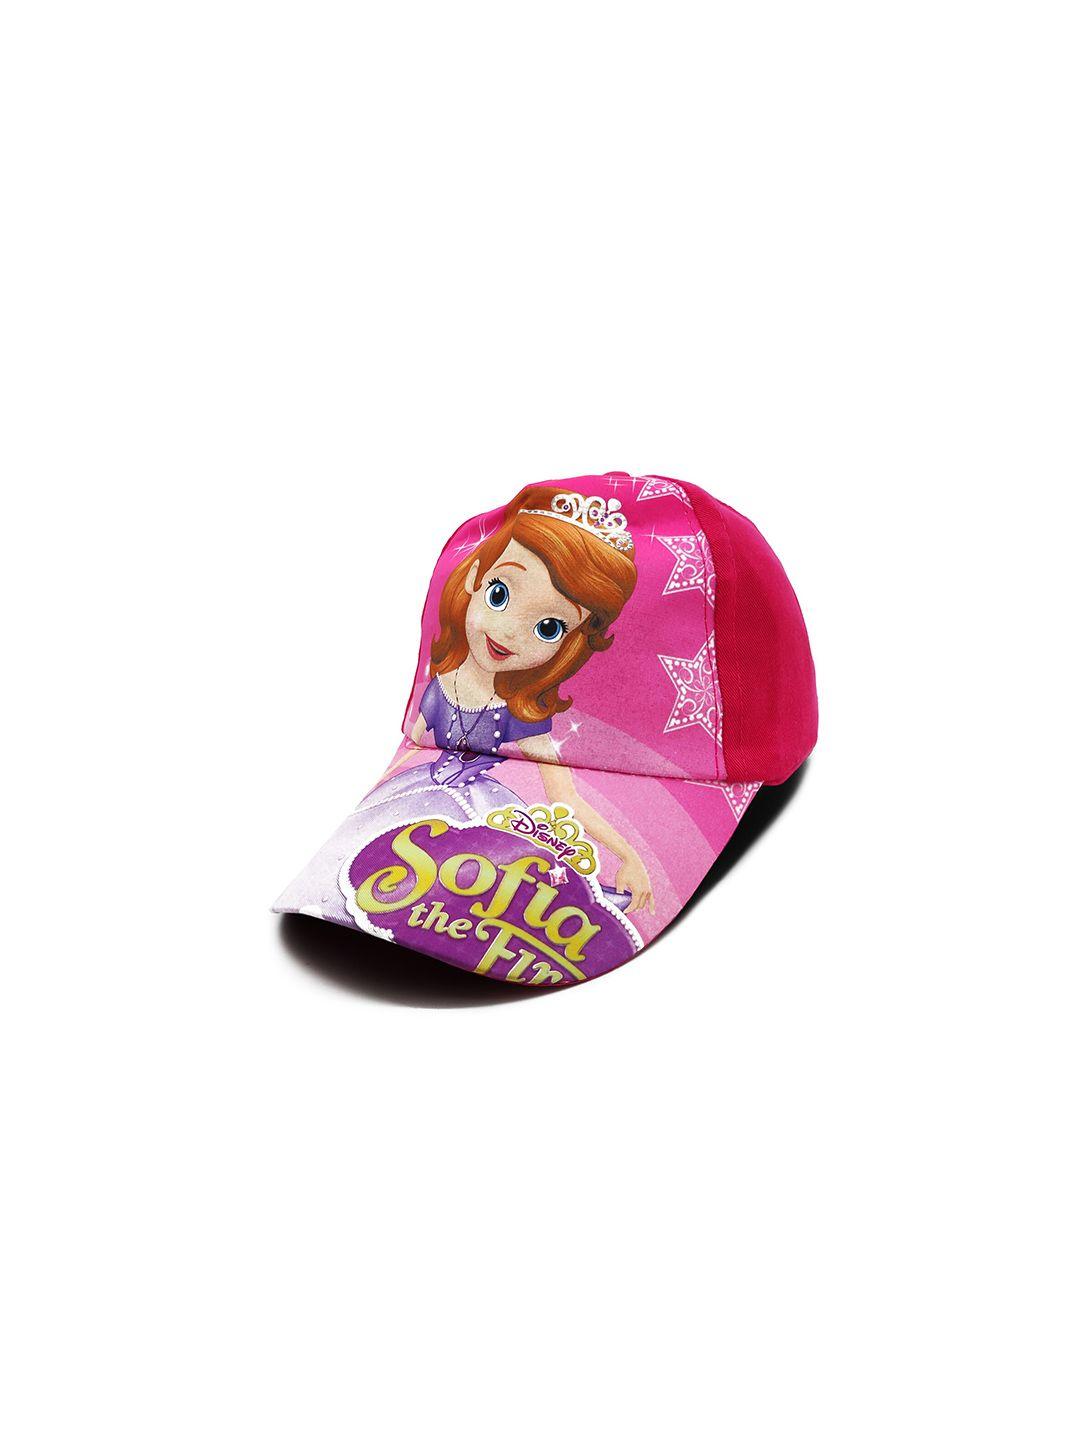 jenna kids cartoon character printed cotton baseball cap